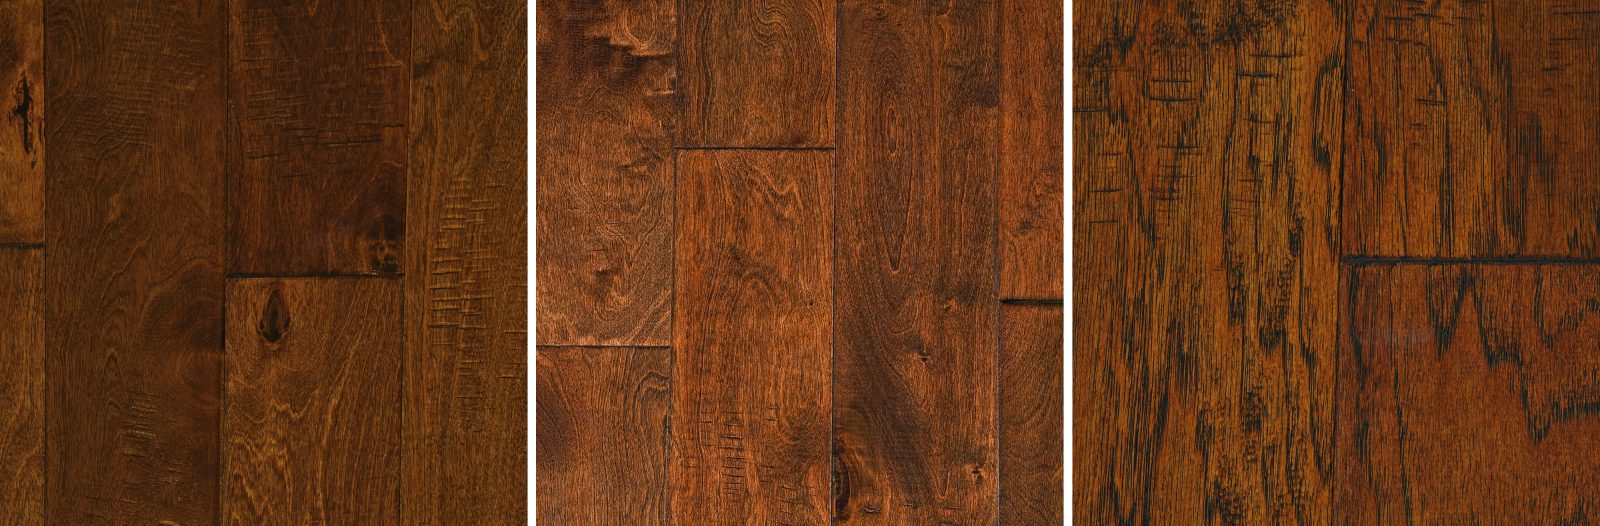 Comparison of Birch Hardwood Flooring